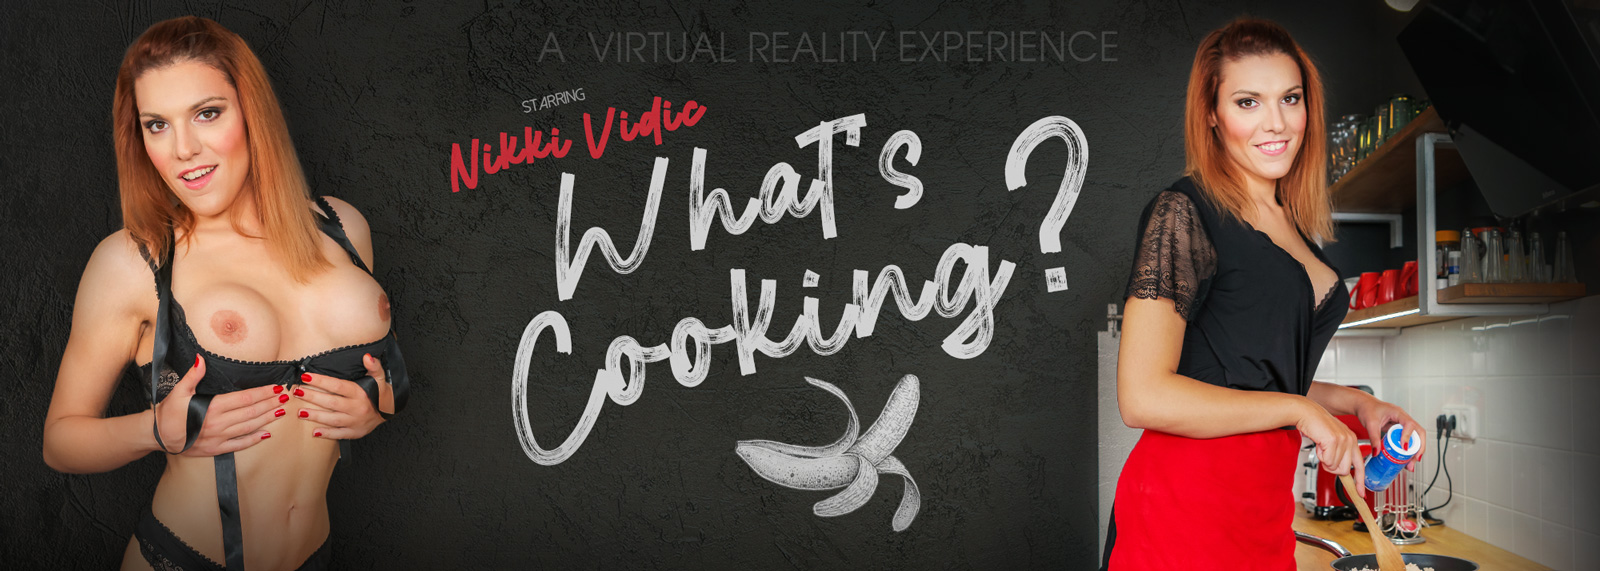 What's Cooking? - VR Porn Video, Starring Nikki Vidic VR